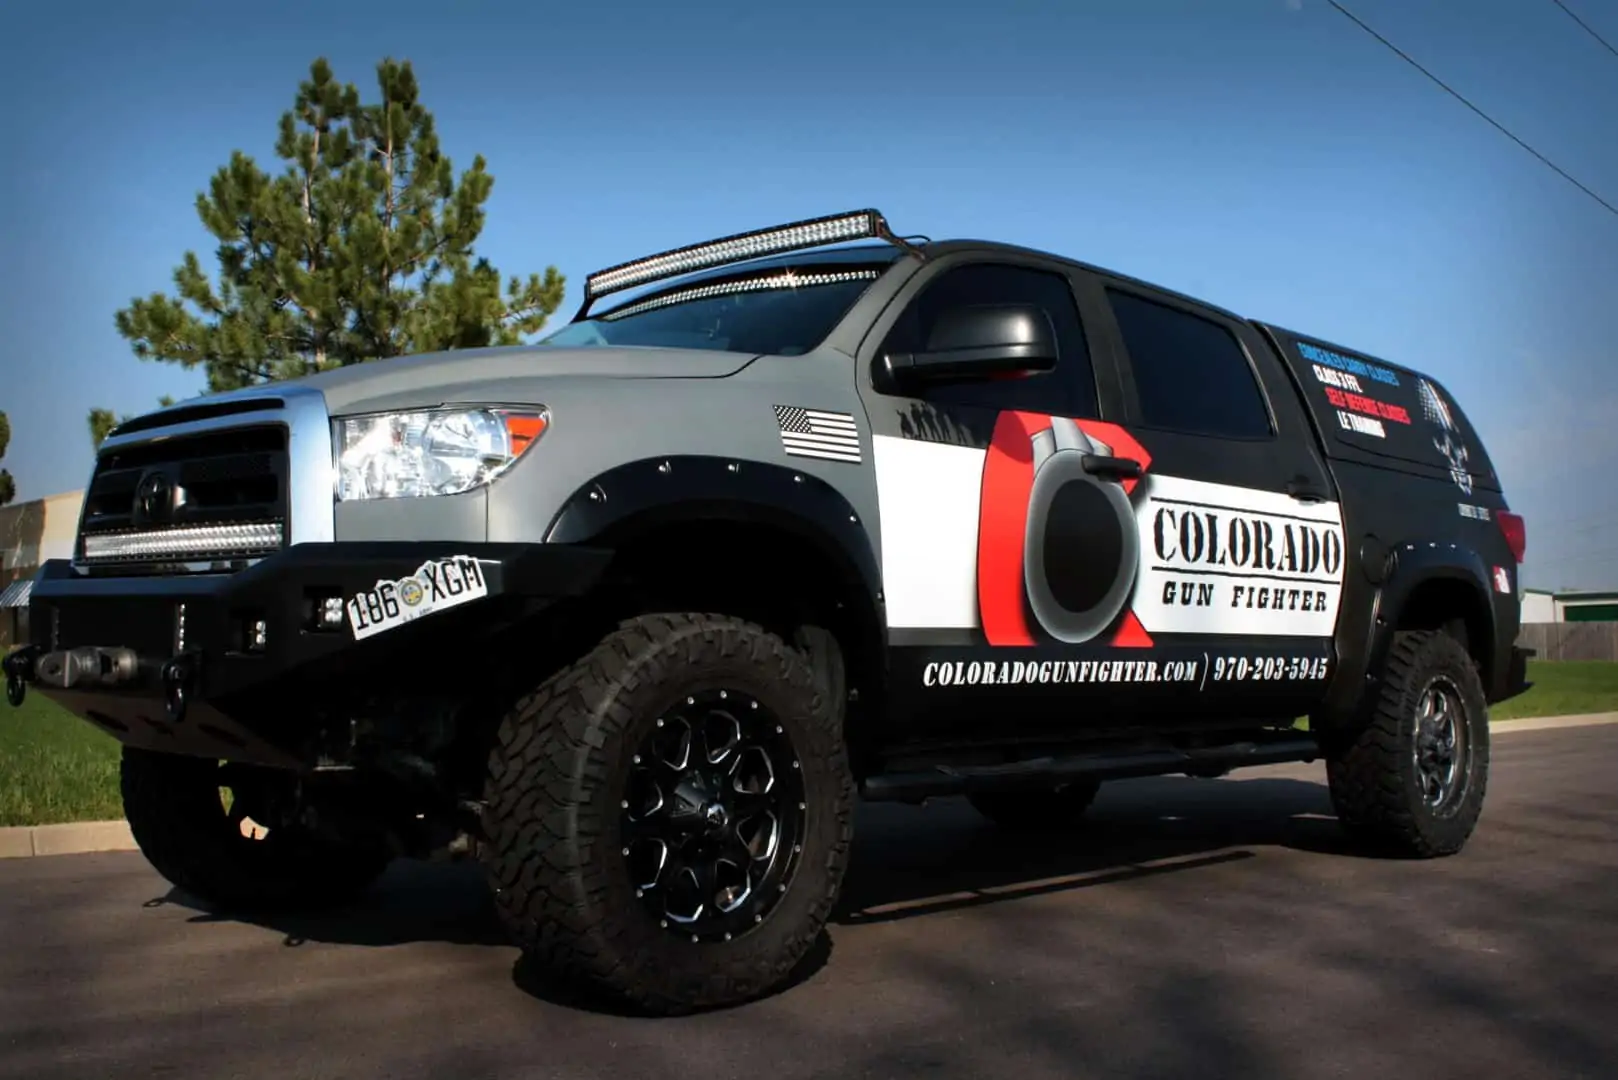 Colorado Gun Fighter's custom matte truck wrap